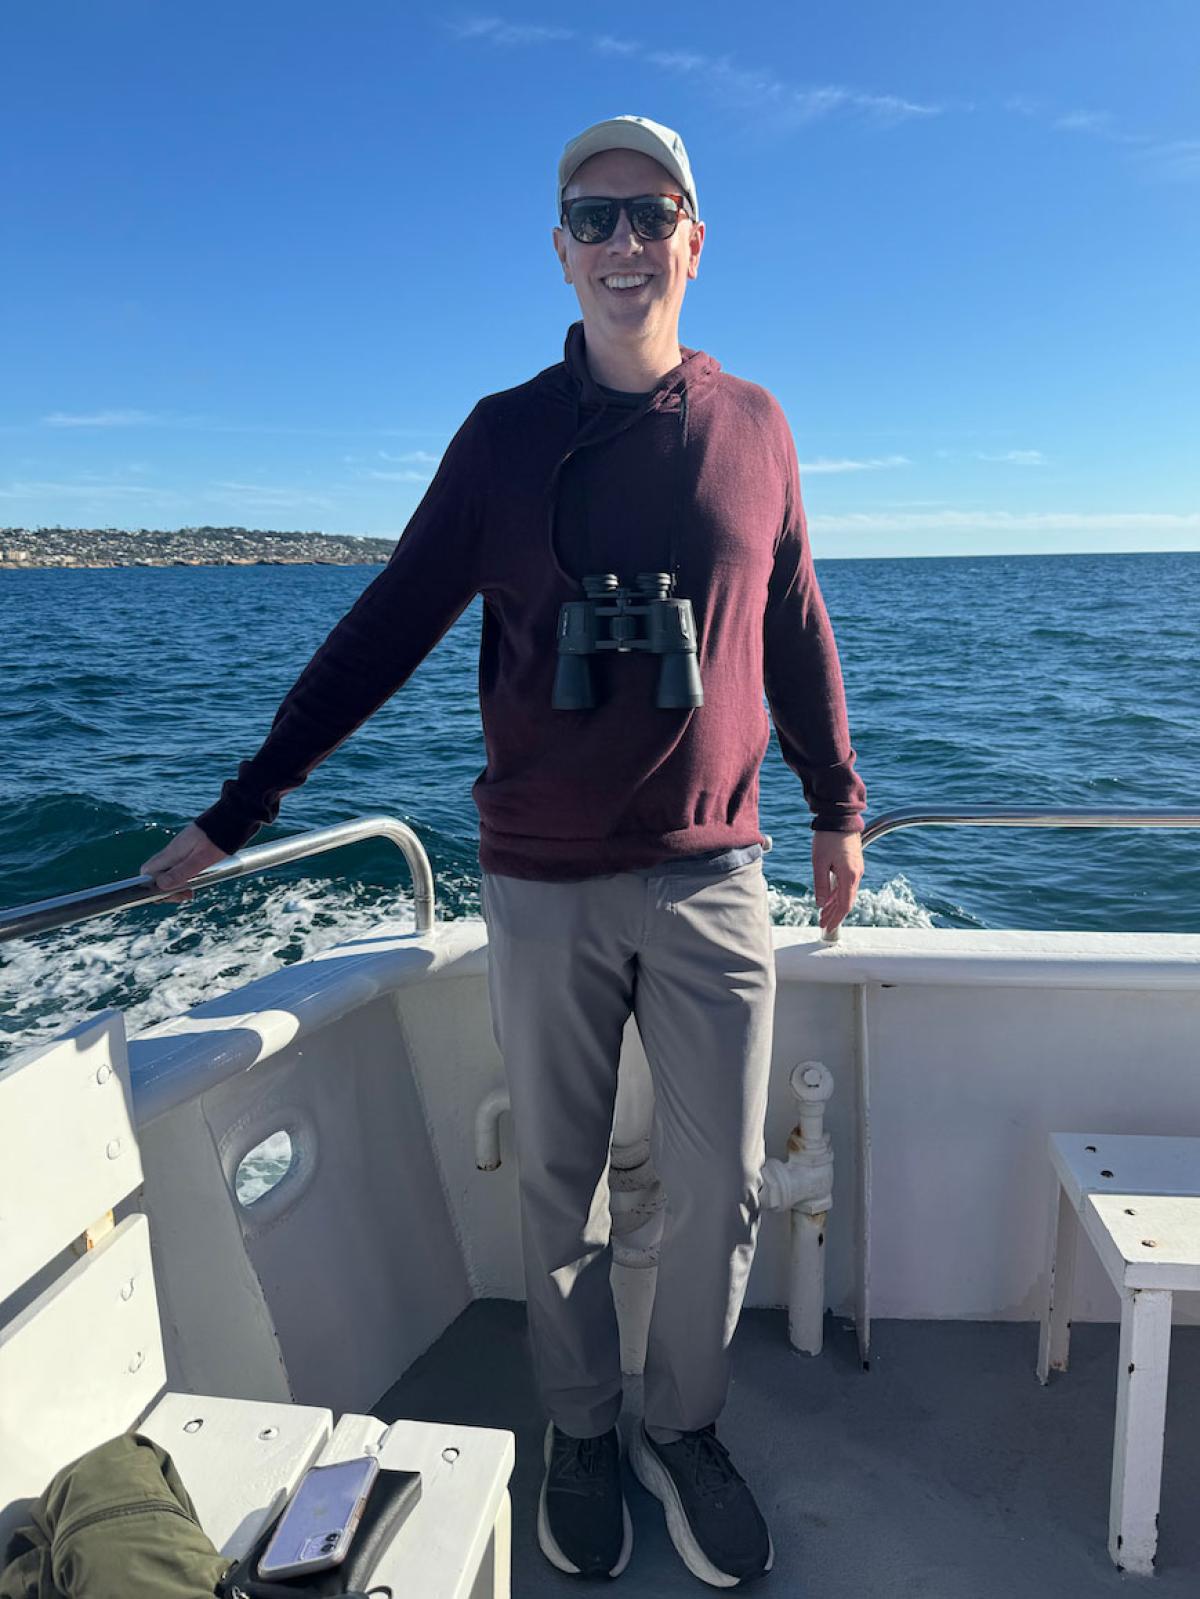 Dan on the boat wearing sunglasses and a dark red sweatshirt